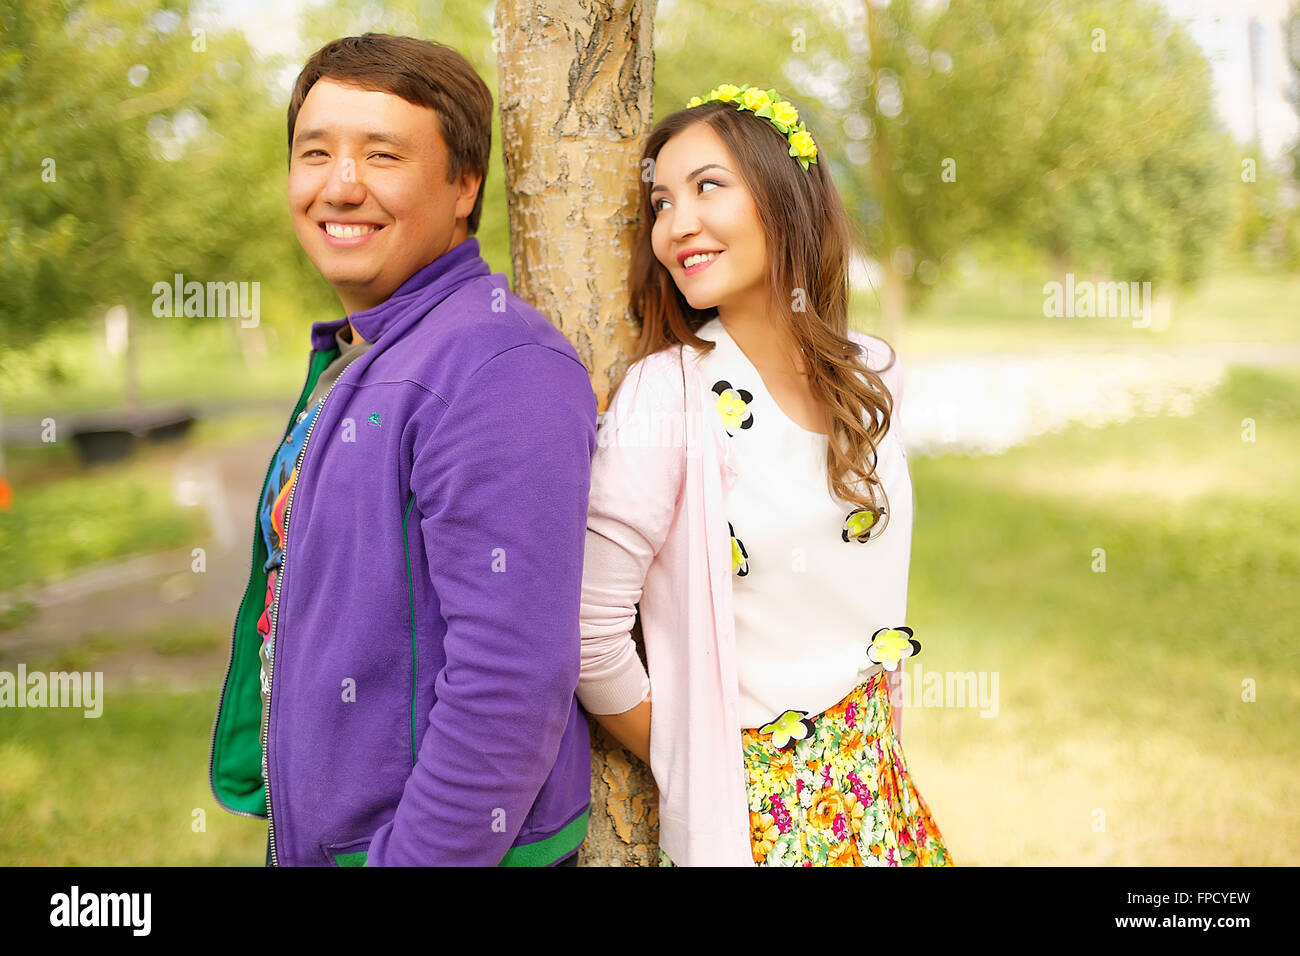 Пара казашек. Фотосессия казахи пара. Молодая казахская пара. Казахская любовь. Супружеская пара казахская.